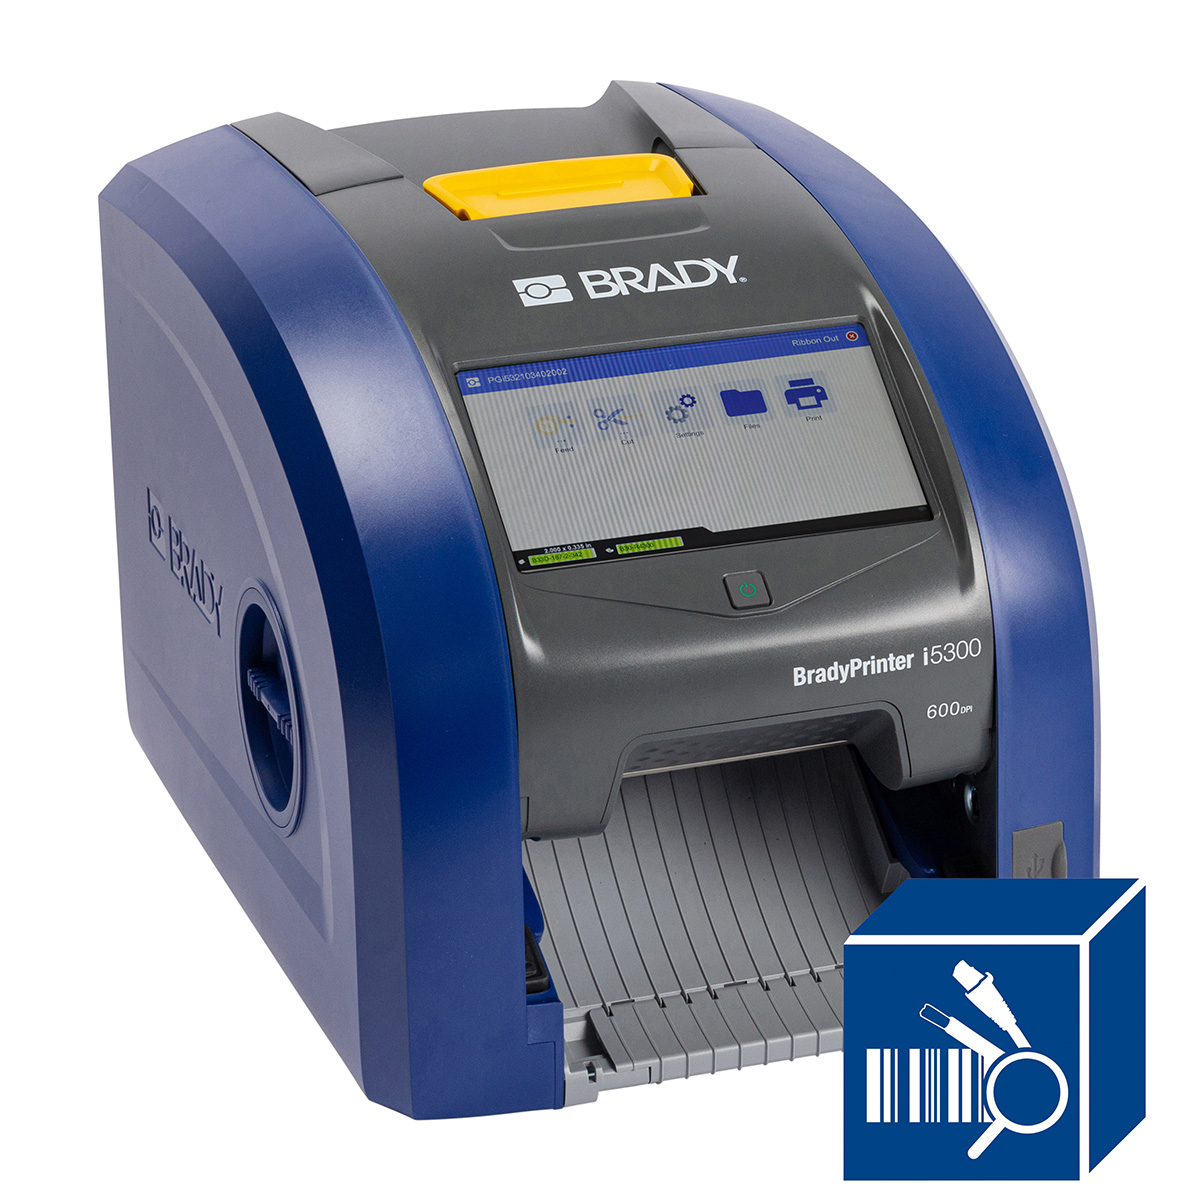 BradyPrinter i5300 Industrial Label Printer | Brady | BradyID.com